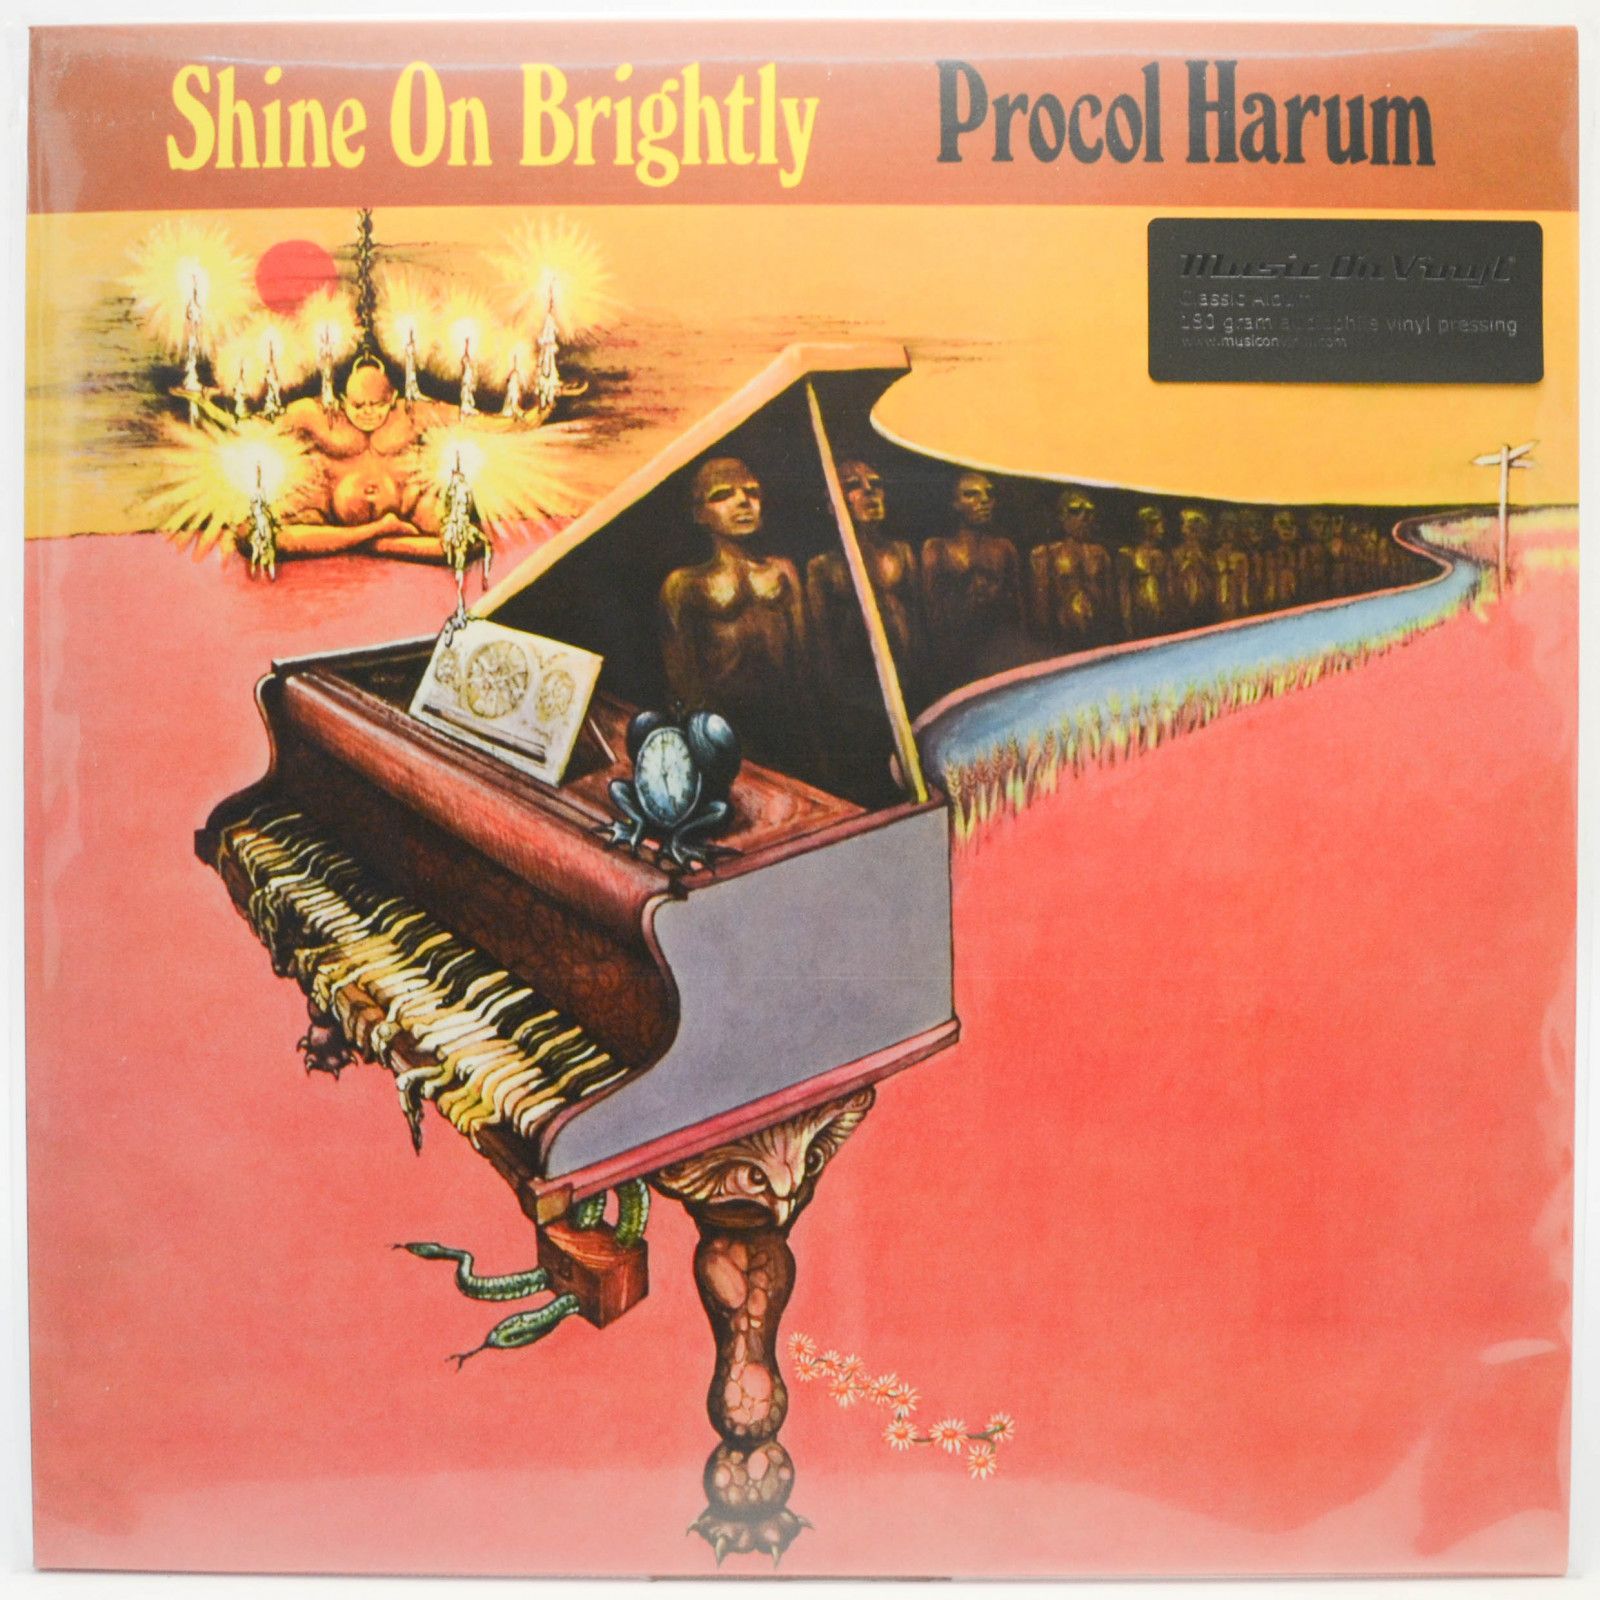 Procol Harum — Shine On Brightly, 1968